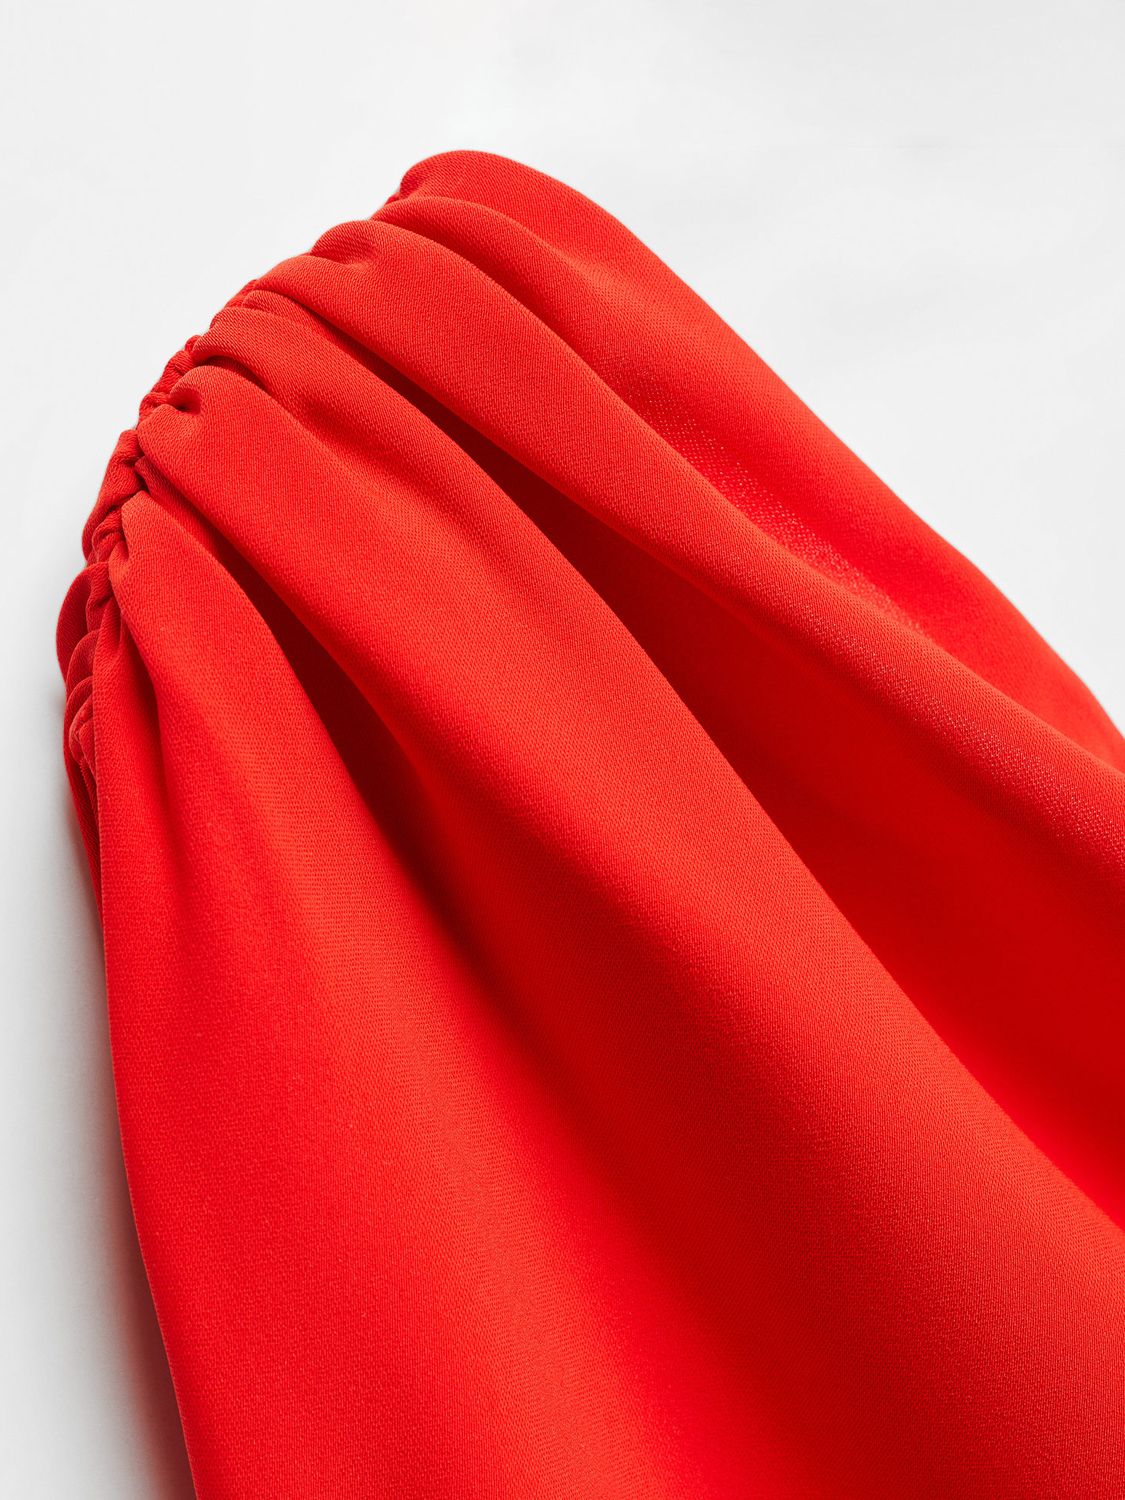 Mango Naty One Shoulder Column Maxi Dress, Red, 10